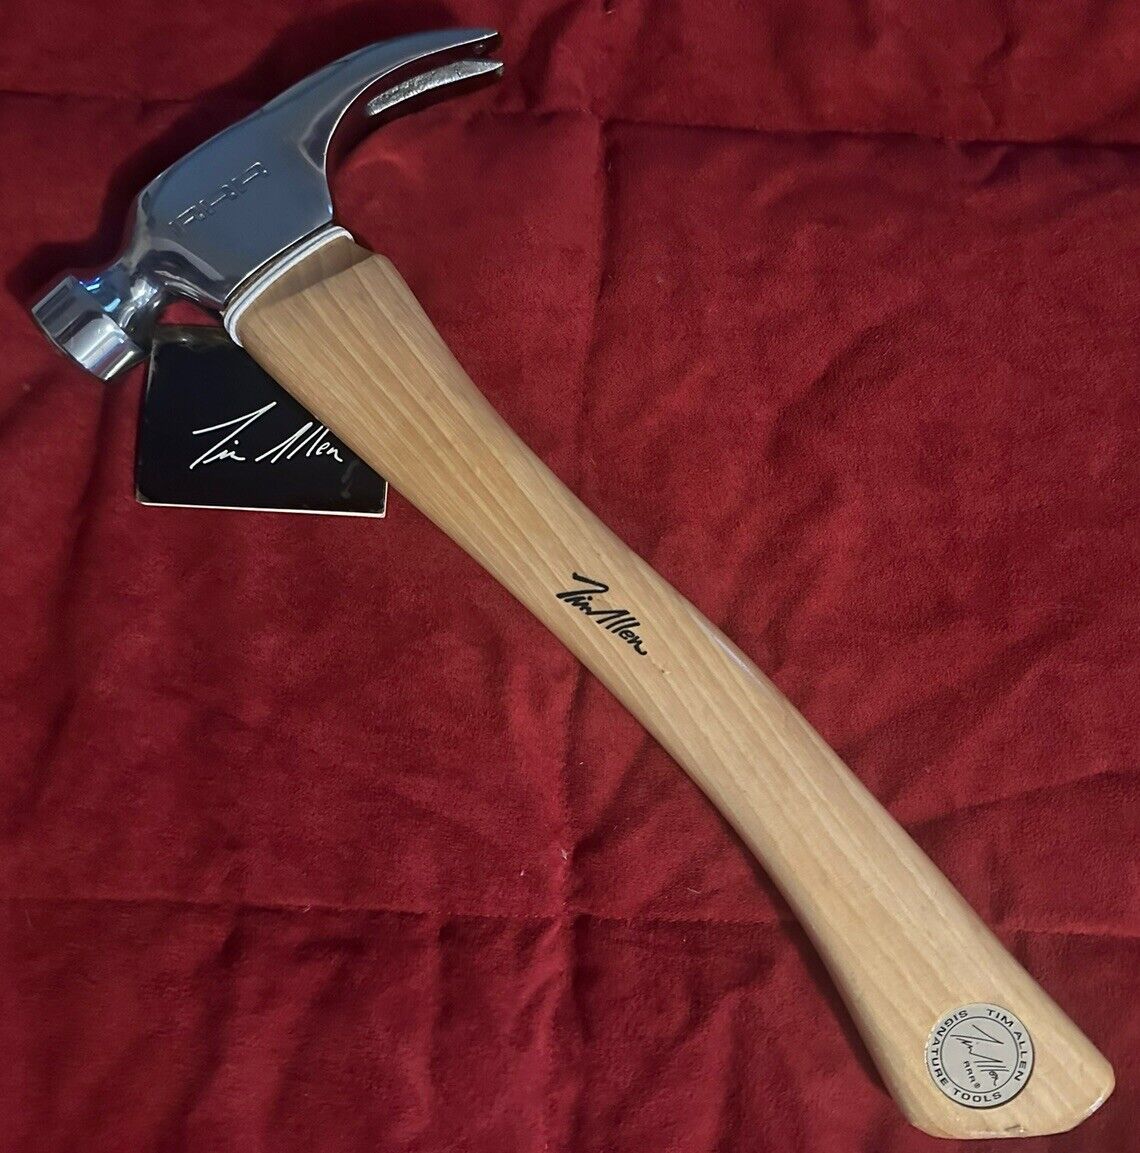 Tim Allen Signature Tools 12 oz Finishing Hammer